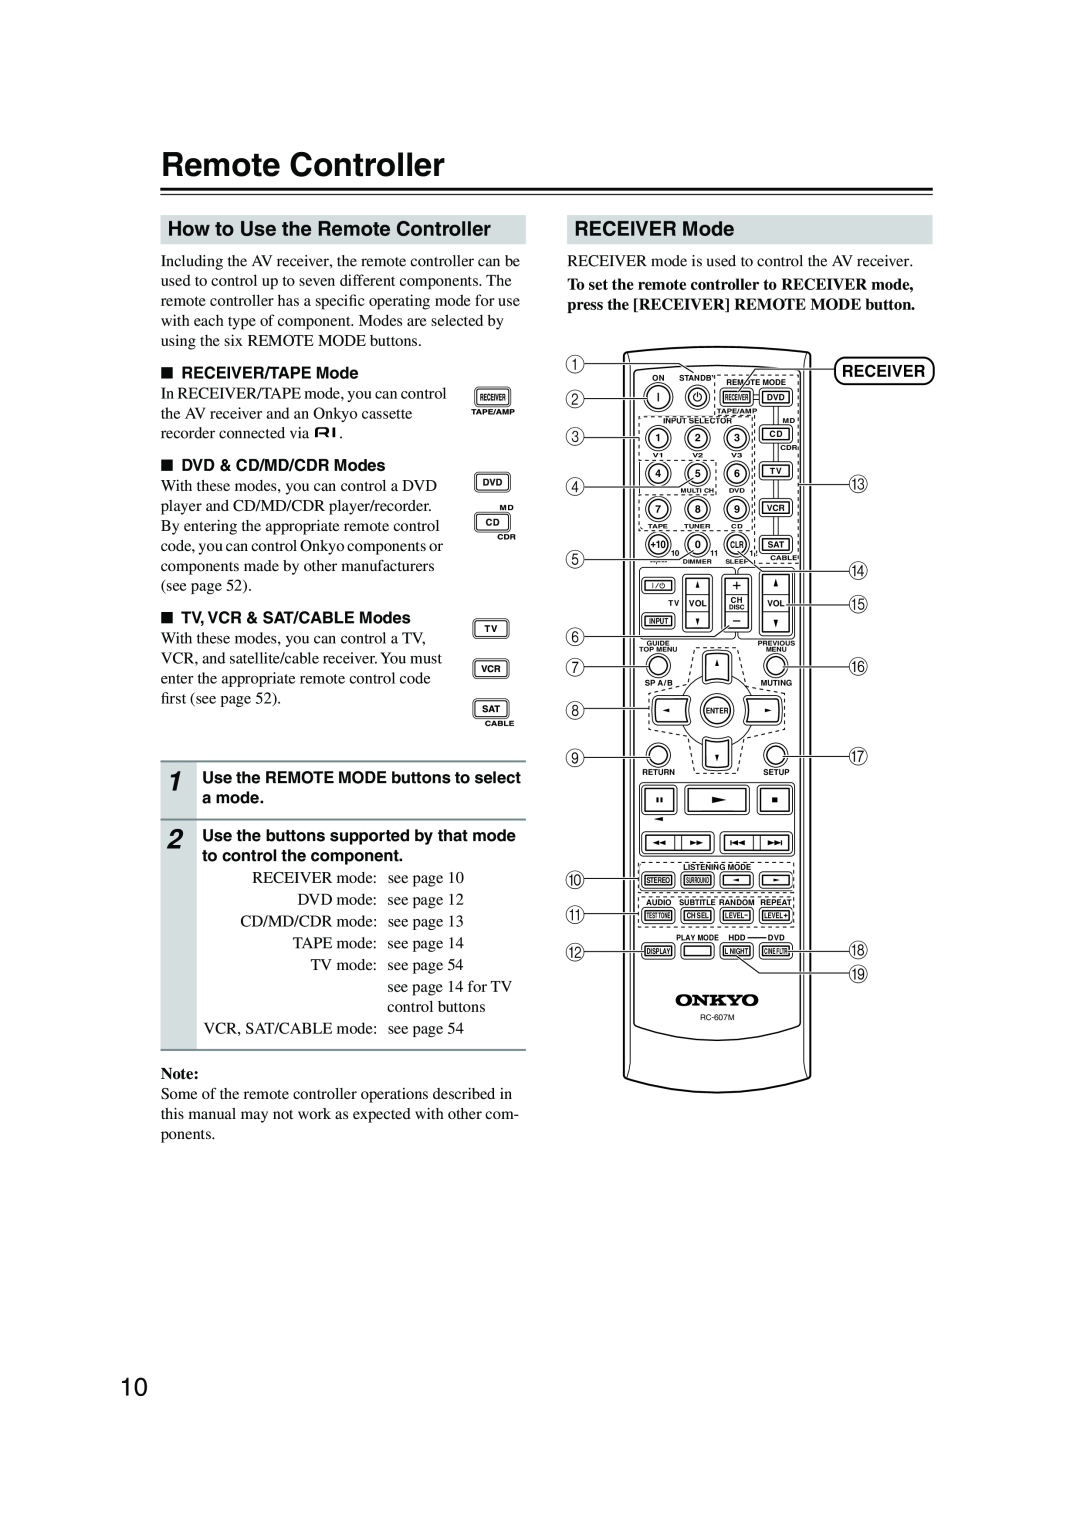 Onkyo TX-SR8350, TX-SR503E How to Use the Remote Controller, RECEIVER Mode, A B C D E F G H I, M N O P Q 